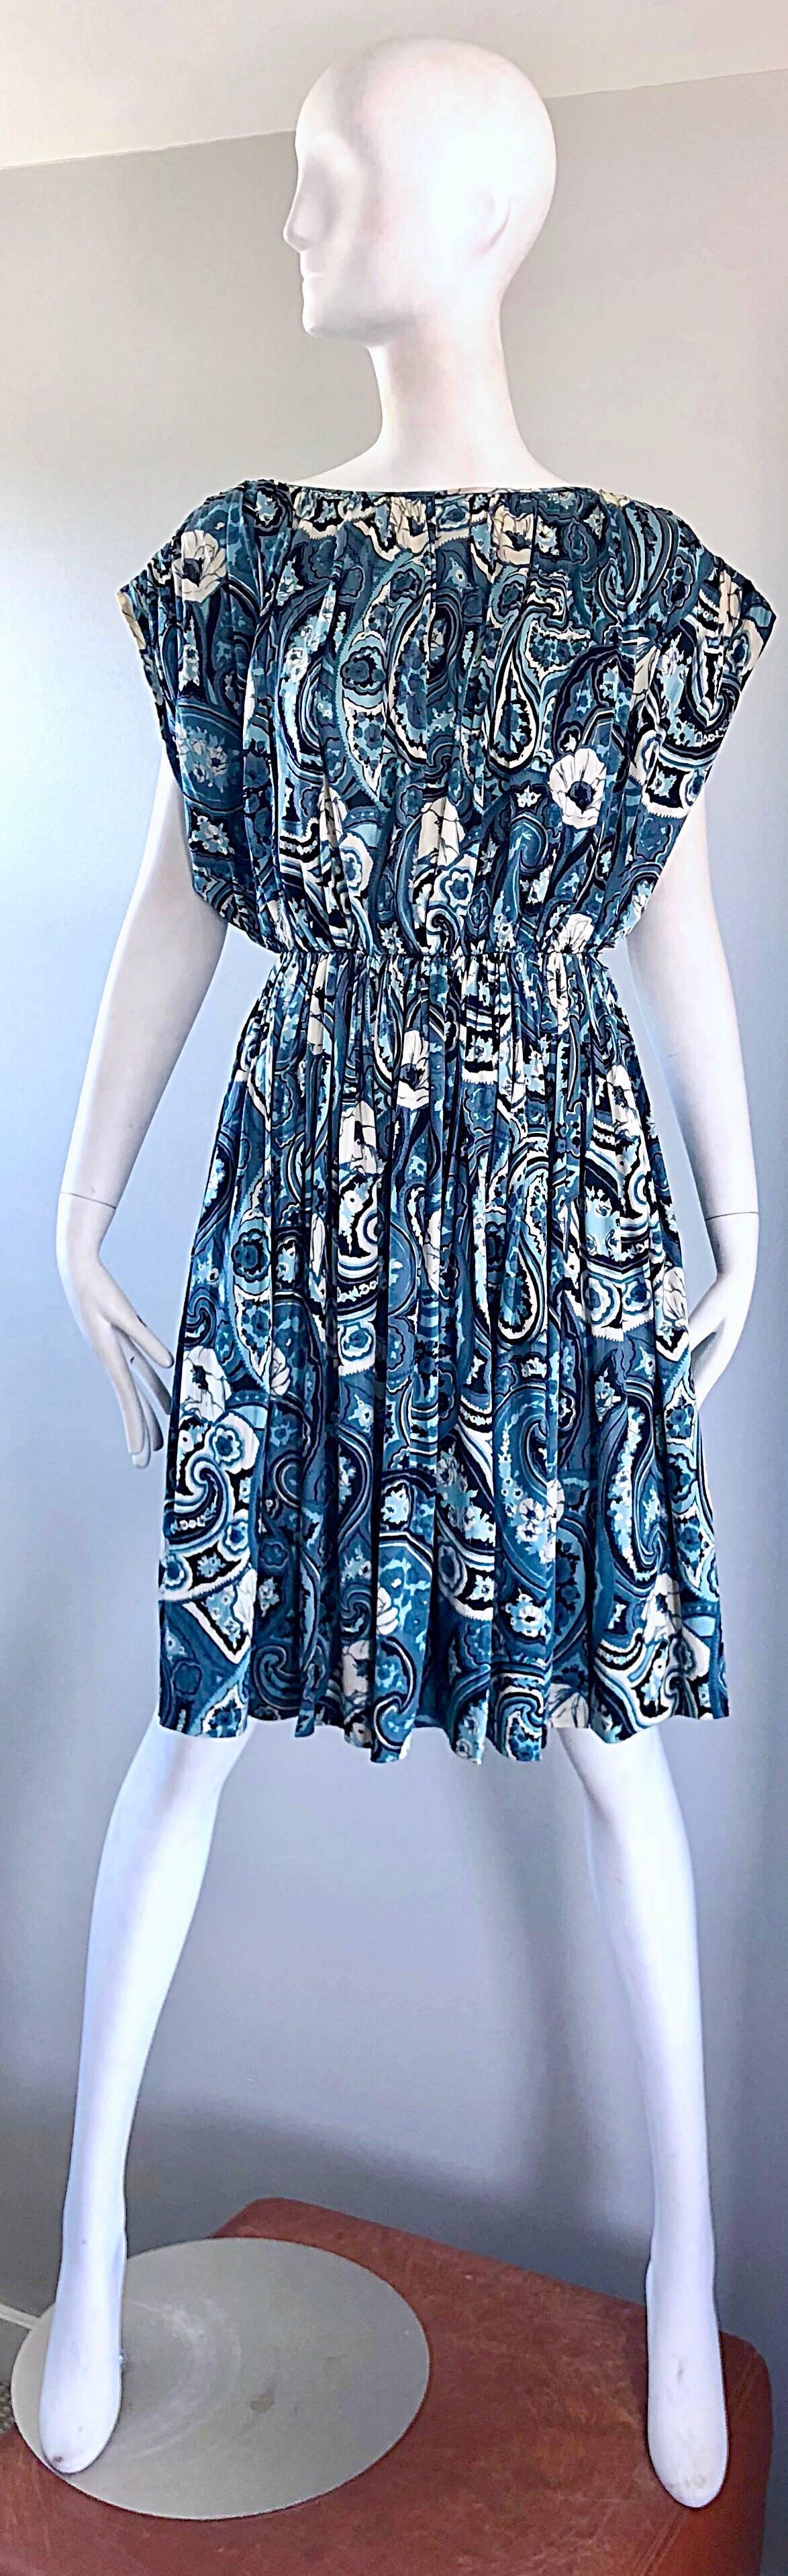 Rare 1970s Townley Blue + White Paisley Flower Print Vintage 70s Dress For Sale 9